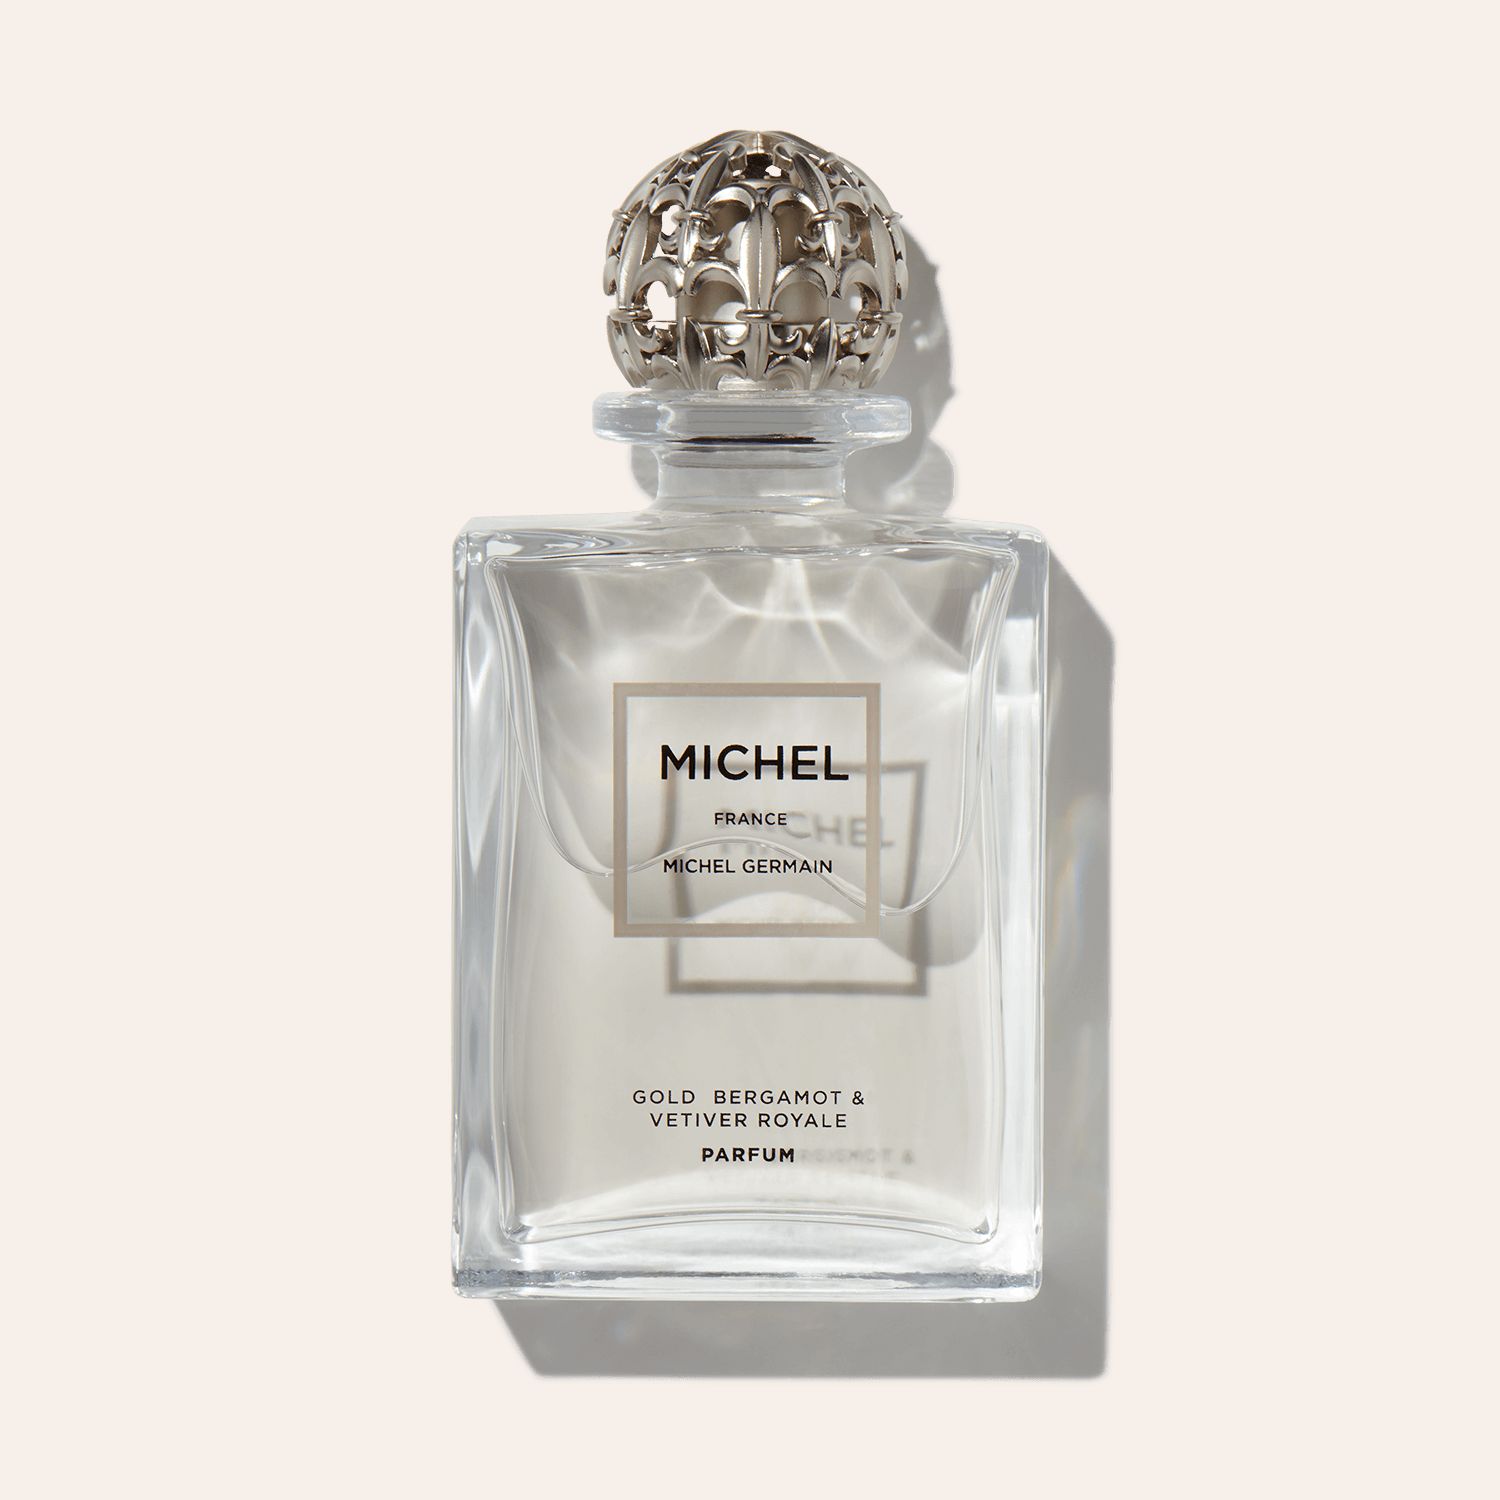 Buy MICHEL GERMAIN Michel - French Oak & Sage Imperiale perfume